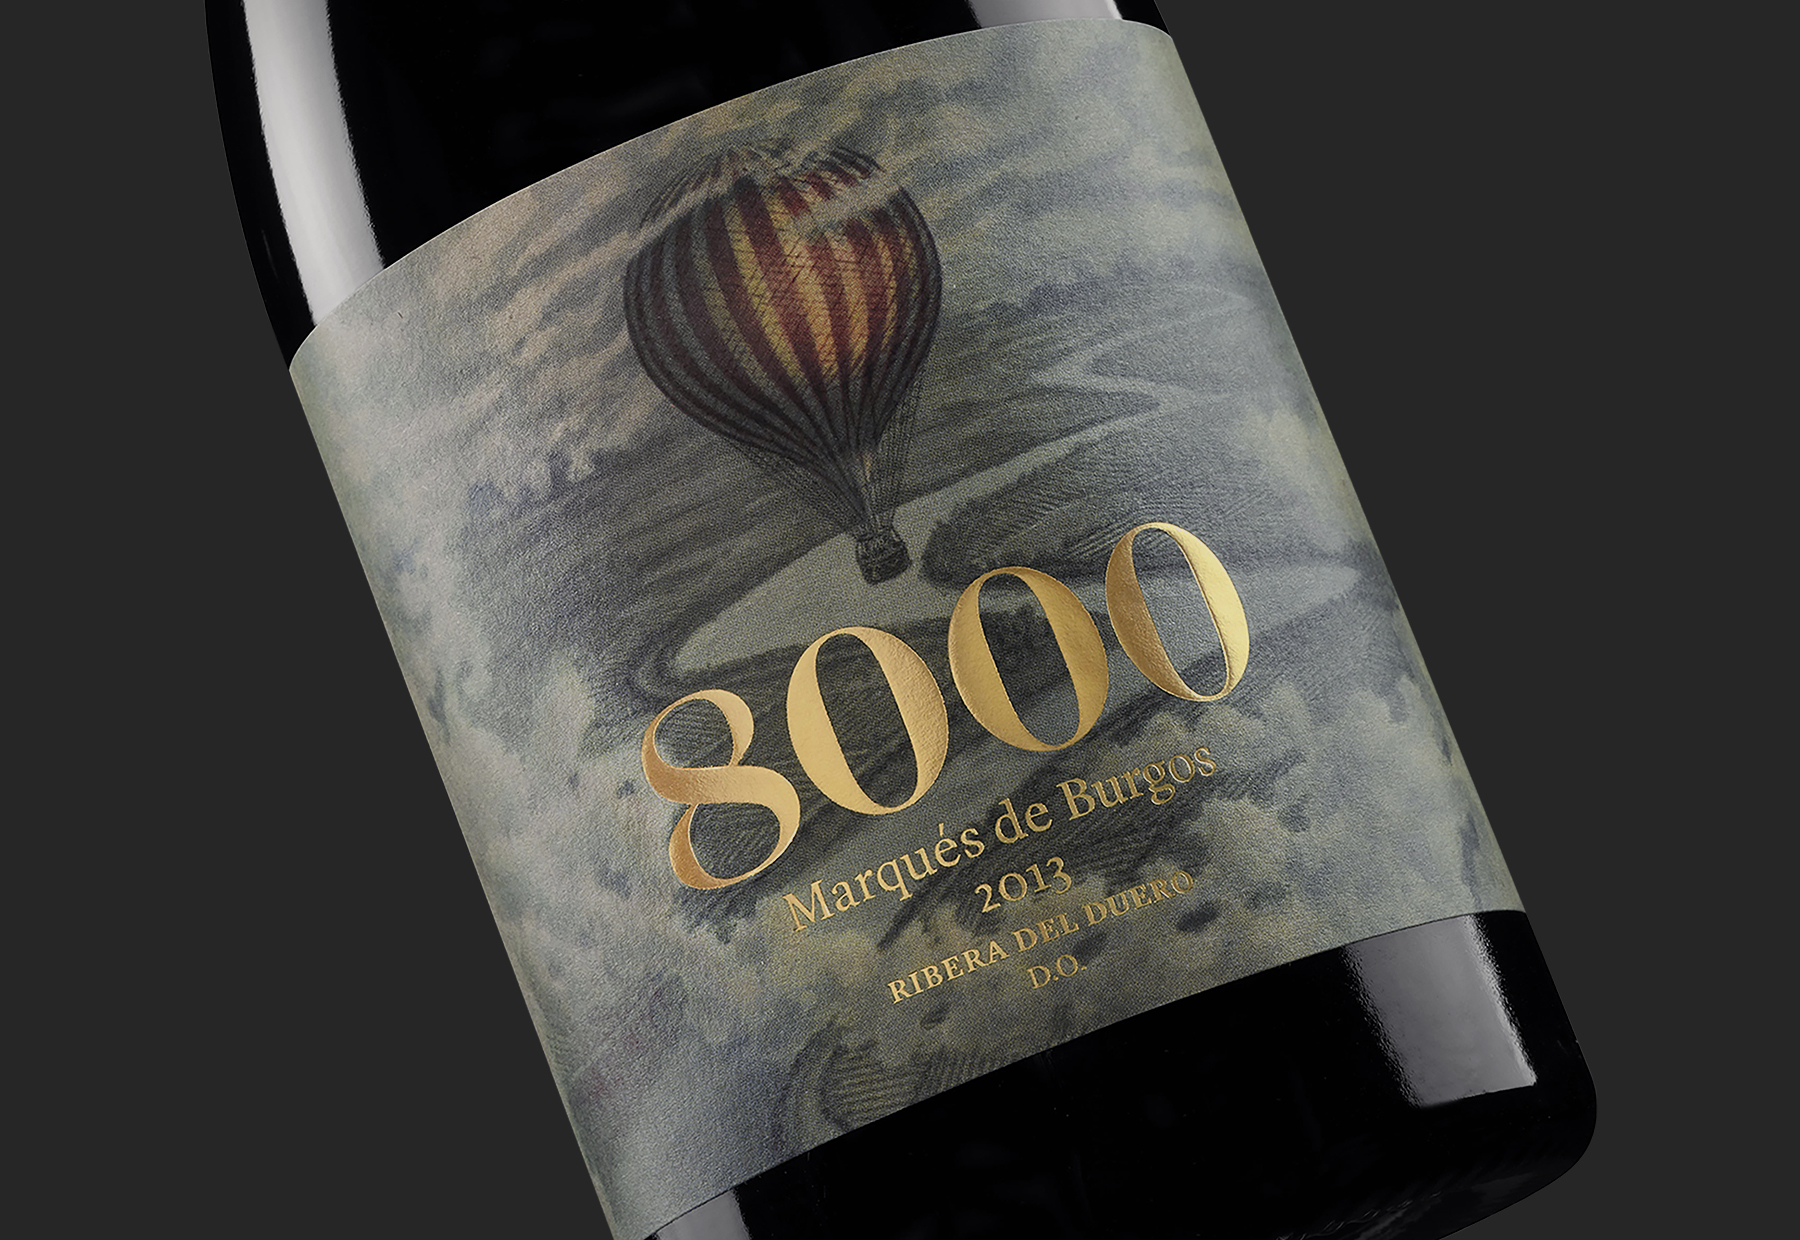 8000 The most Extraordinary Wine from Marqués de Burgos by Moruba